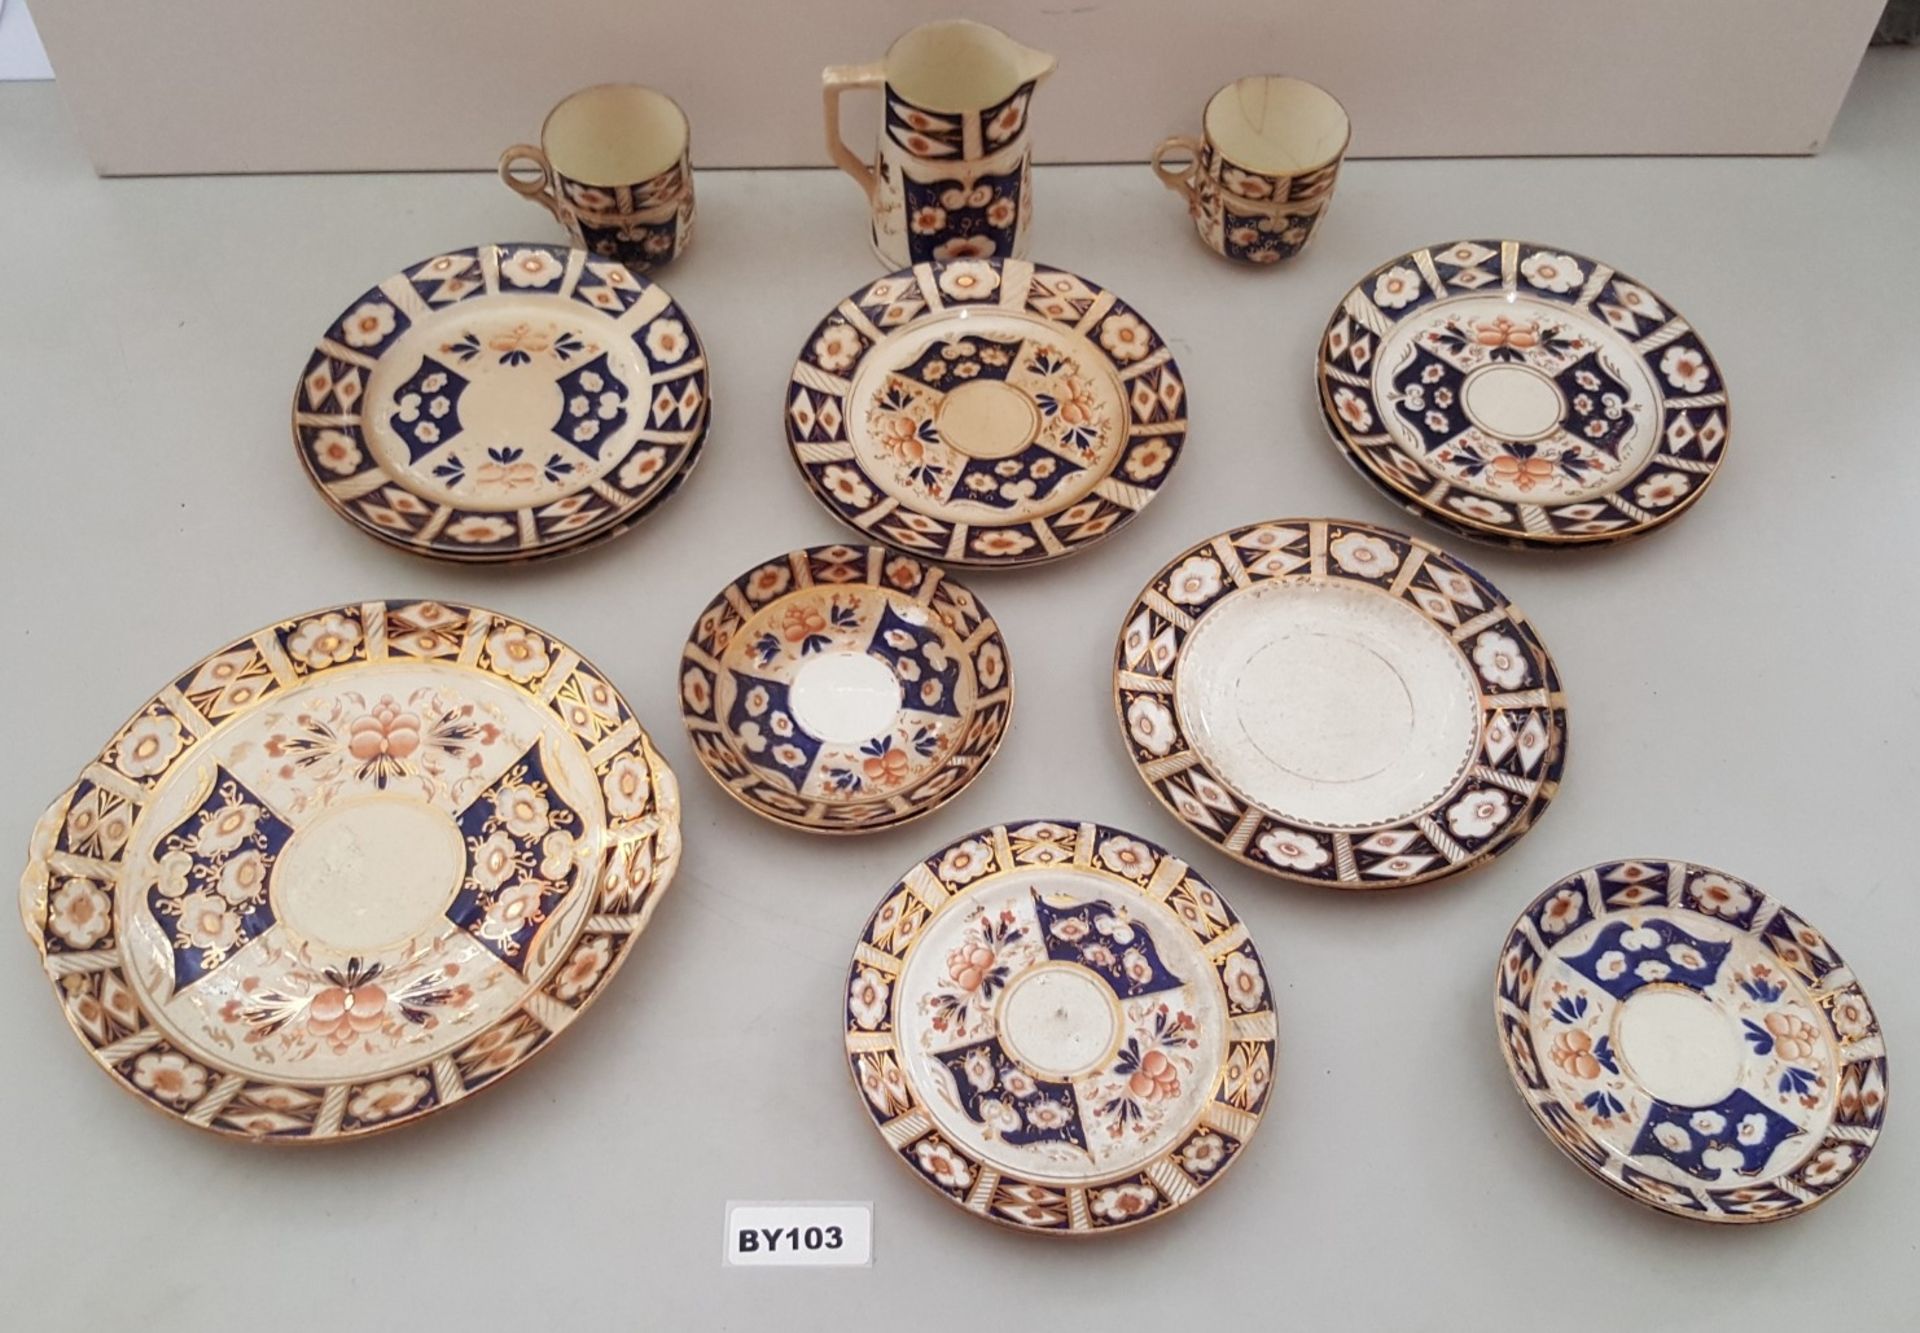 1 x 18 Pieces Of Royal Sutherland China Imari Pattern Crockery - Ref BY103 I - Image 3 of 5